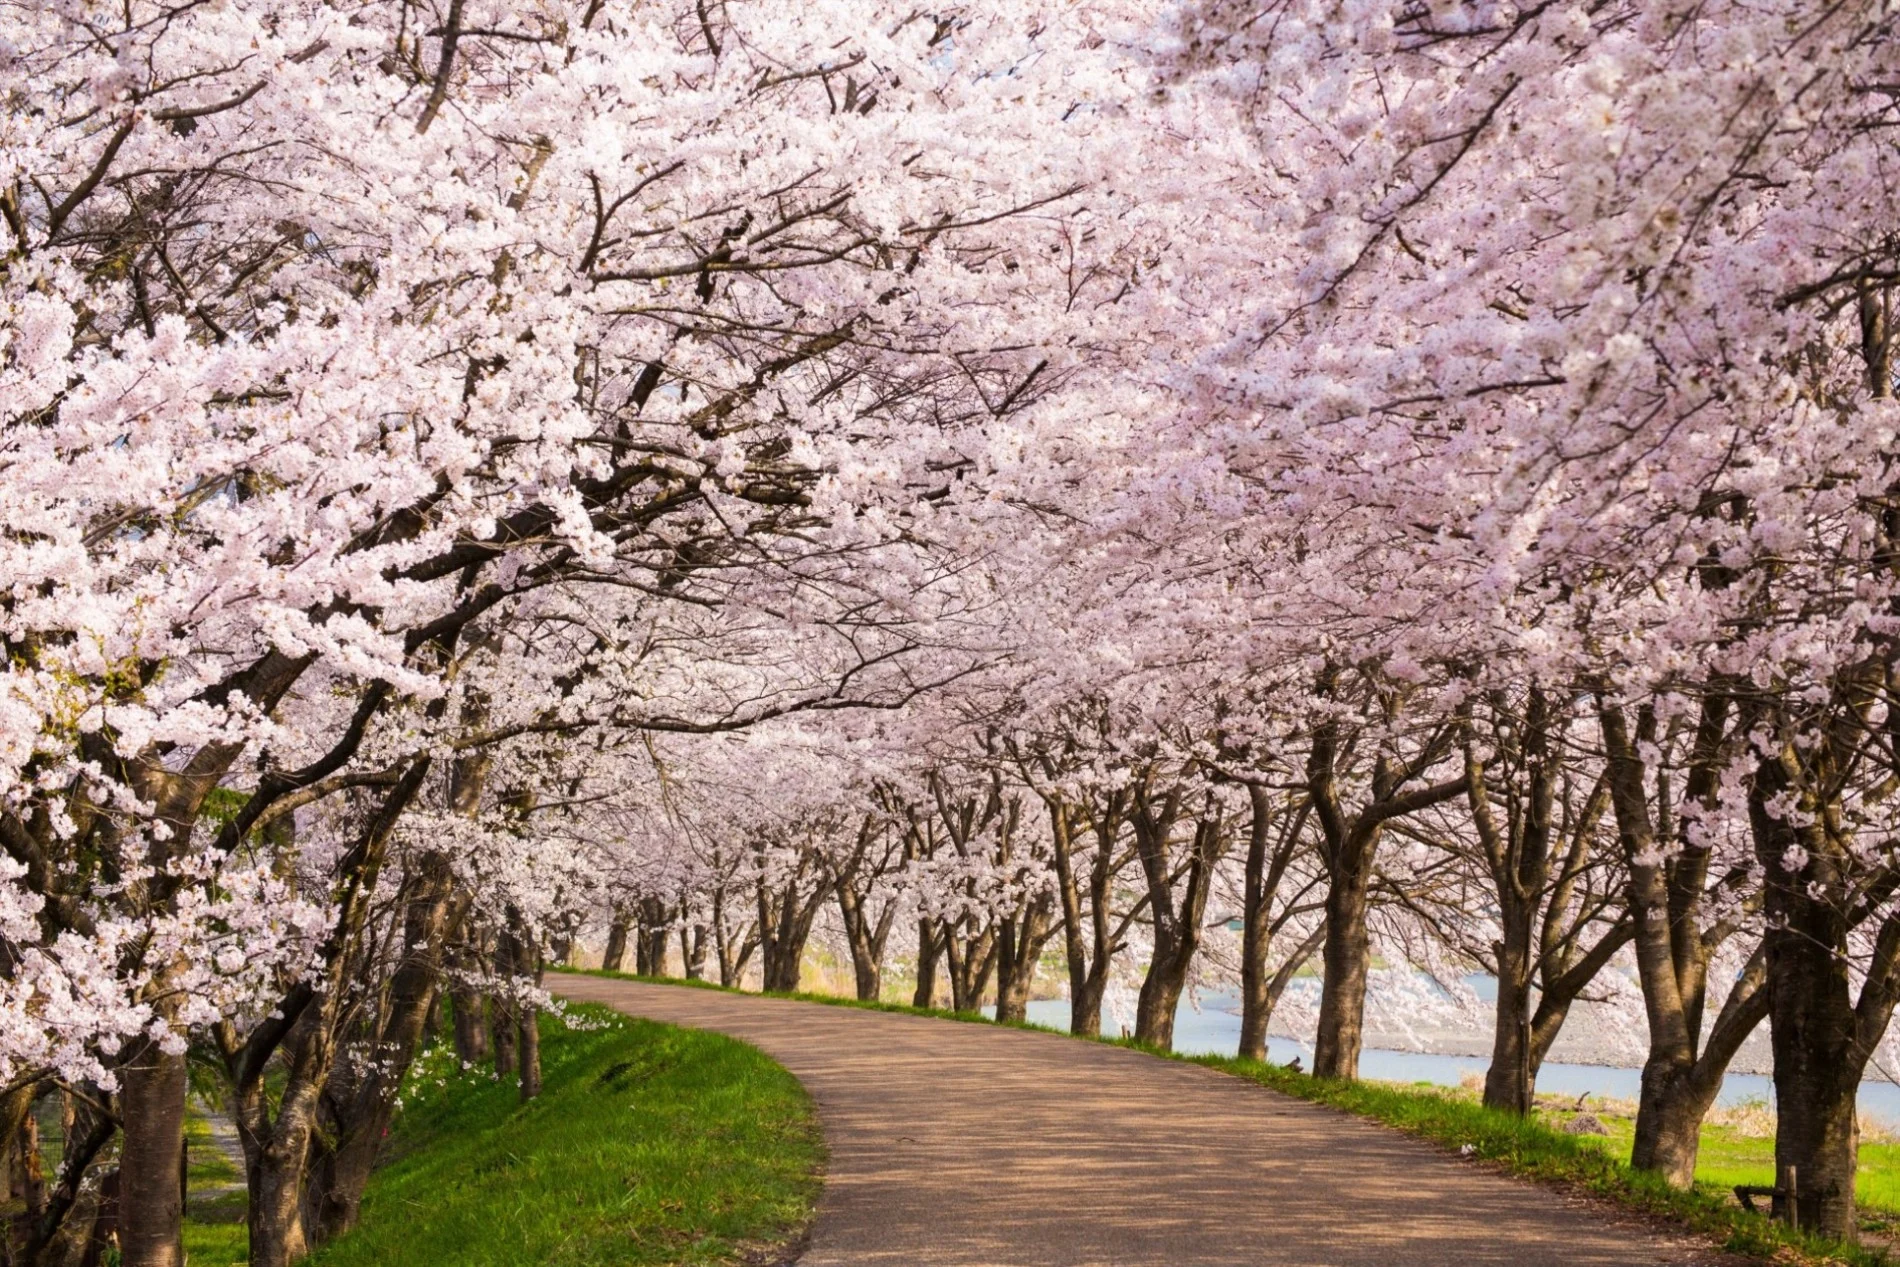 Japan sees earliest cherry blossom season in 1,200 years